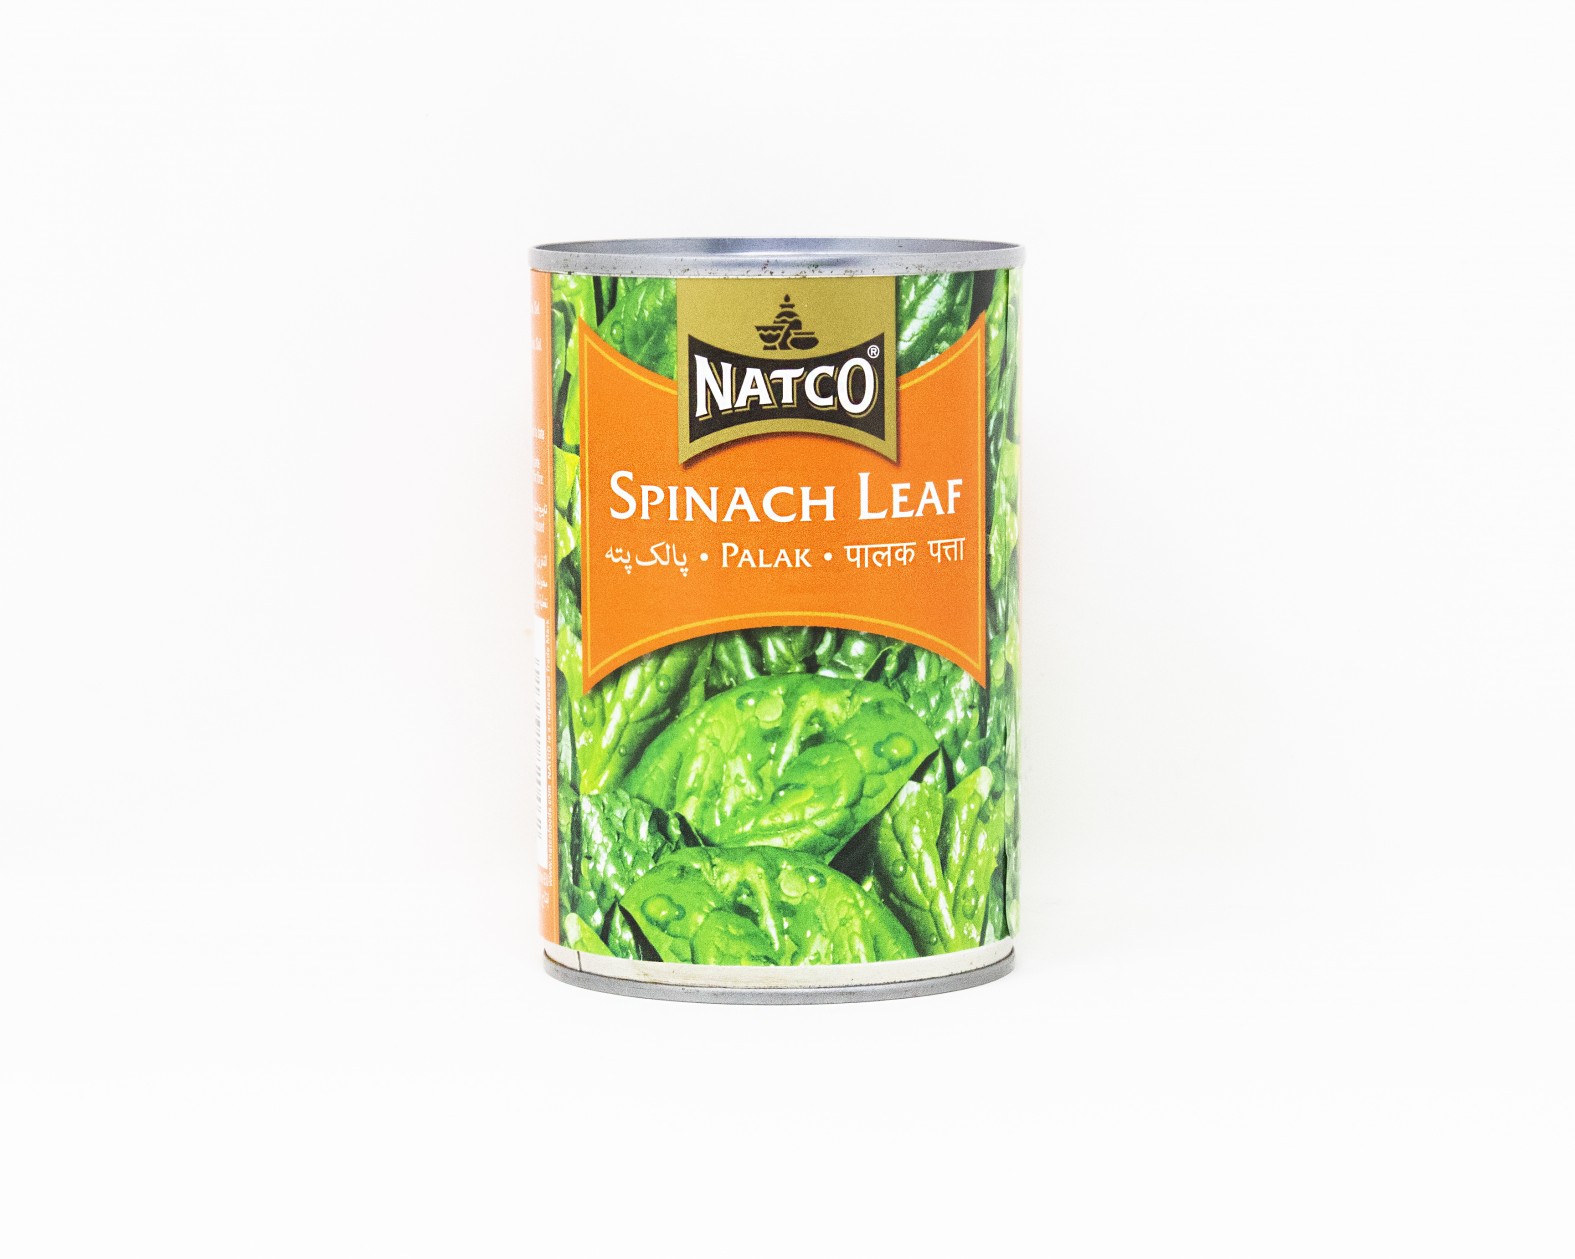 Natco Tinned Spinach Leaf 765g